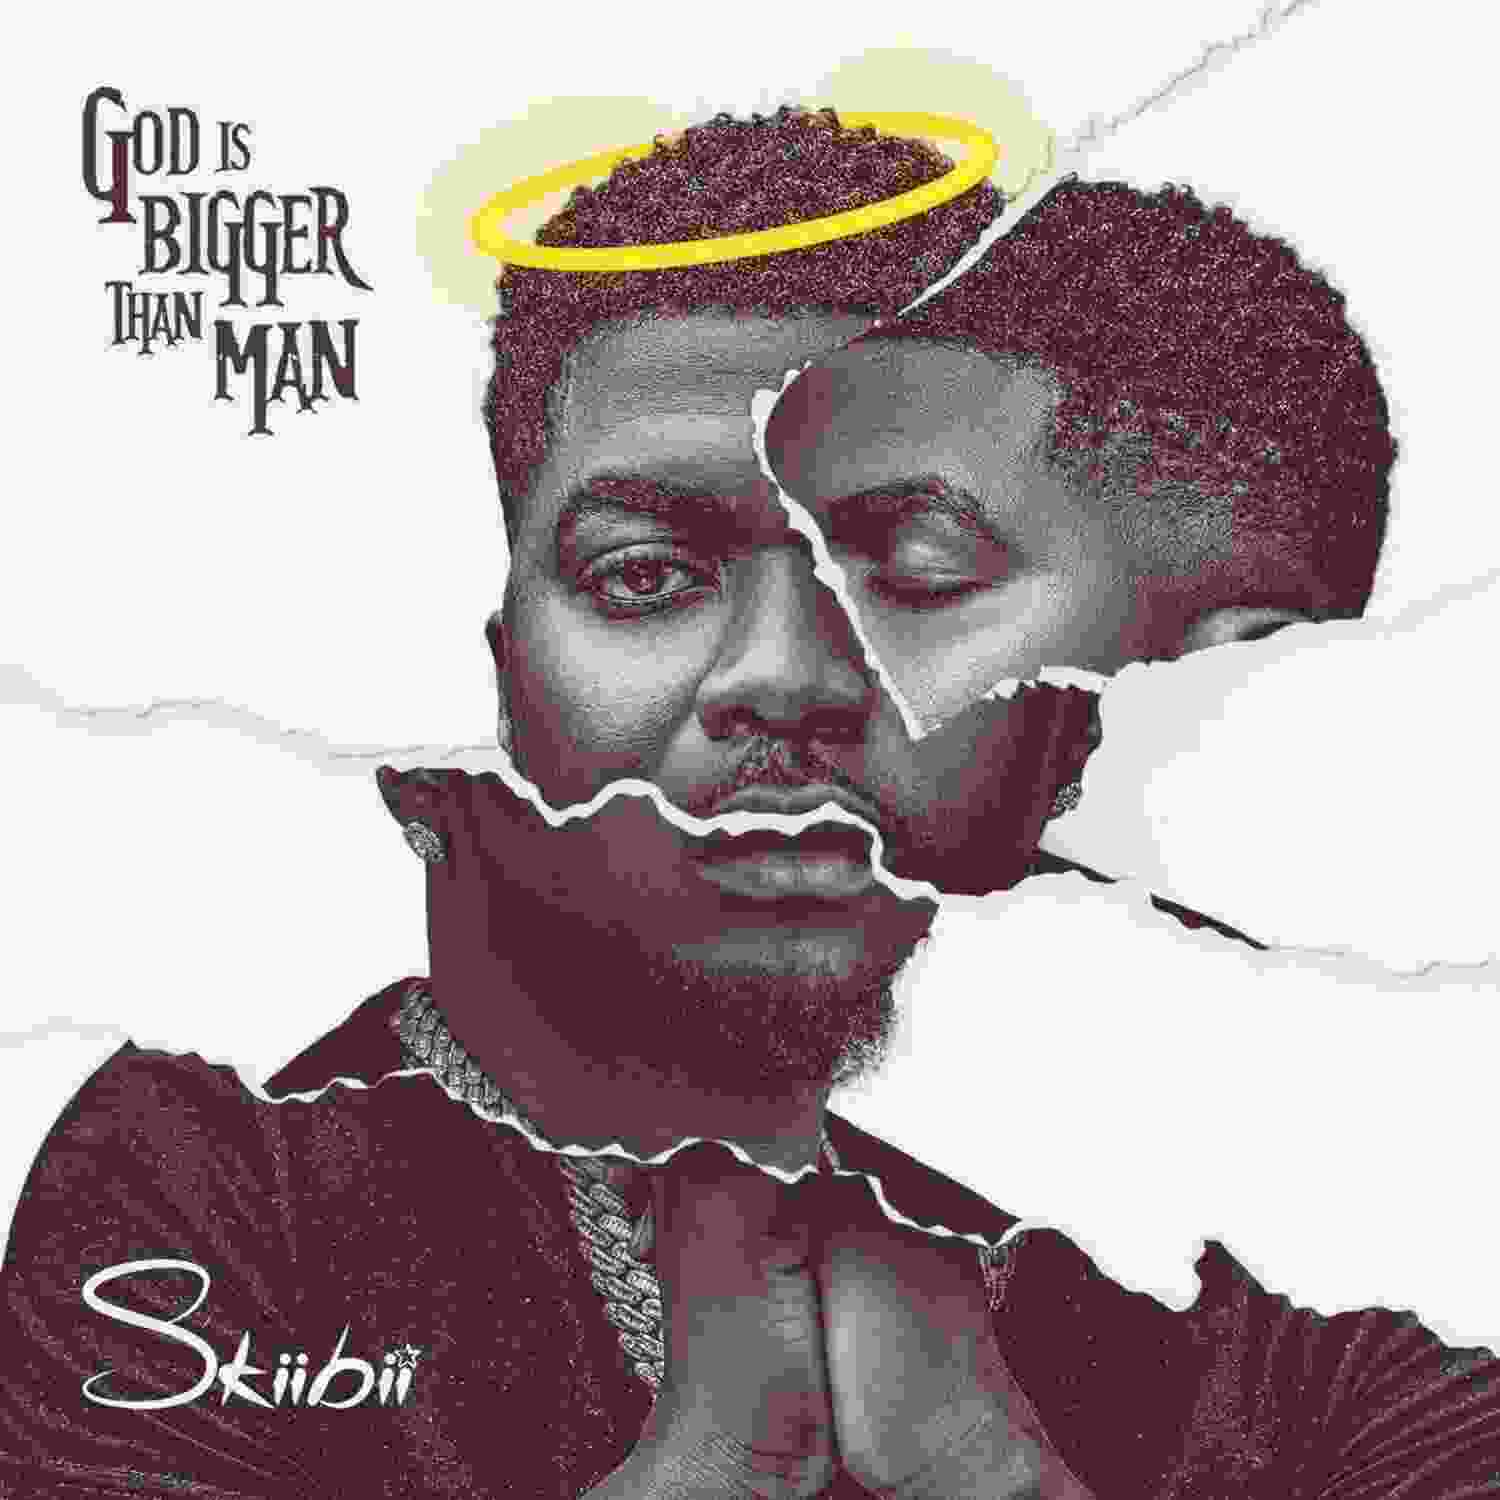 Skiibii - "God is Bigger Than Man" EP